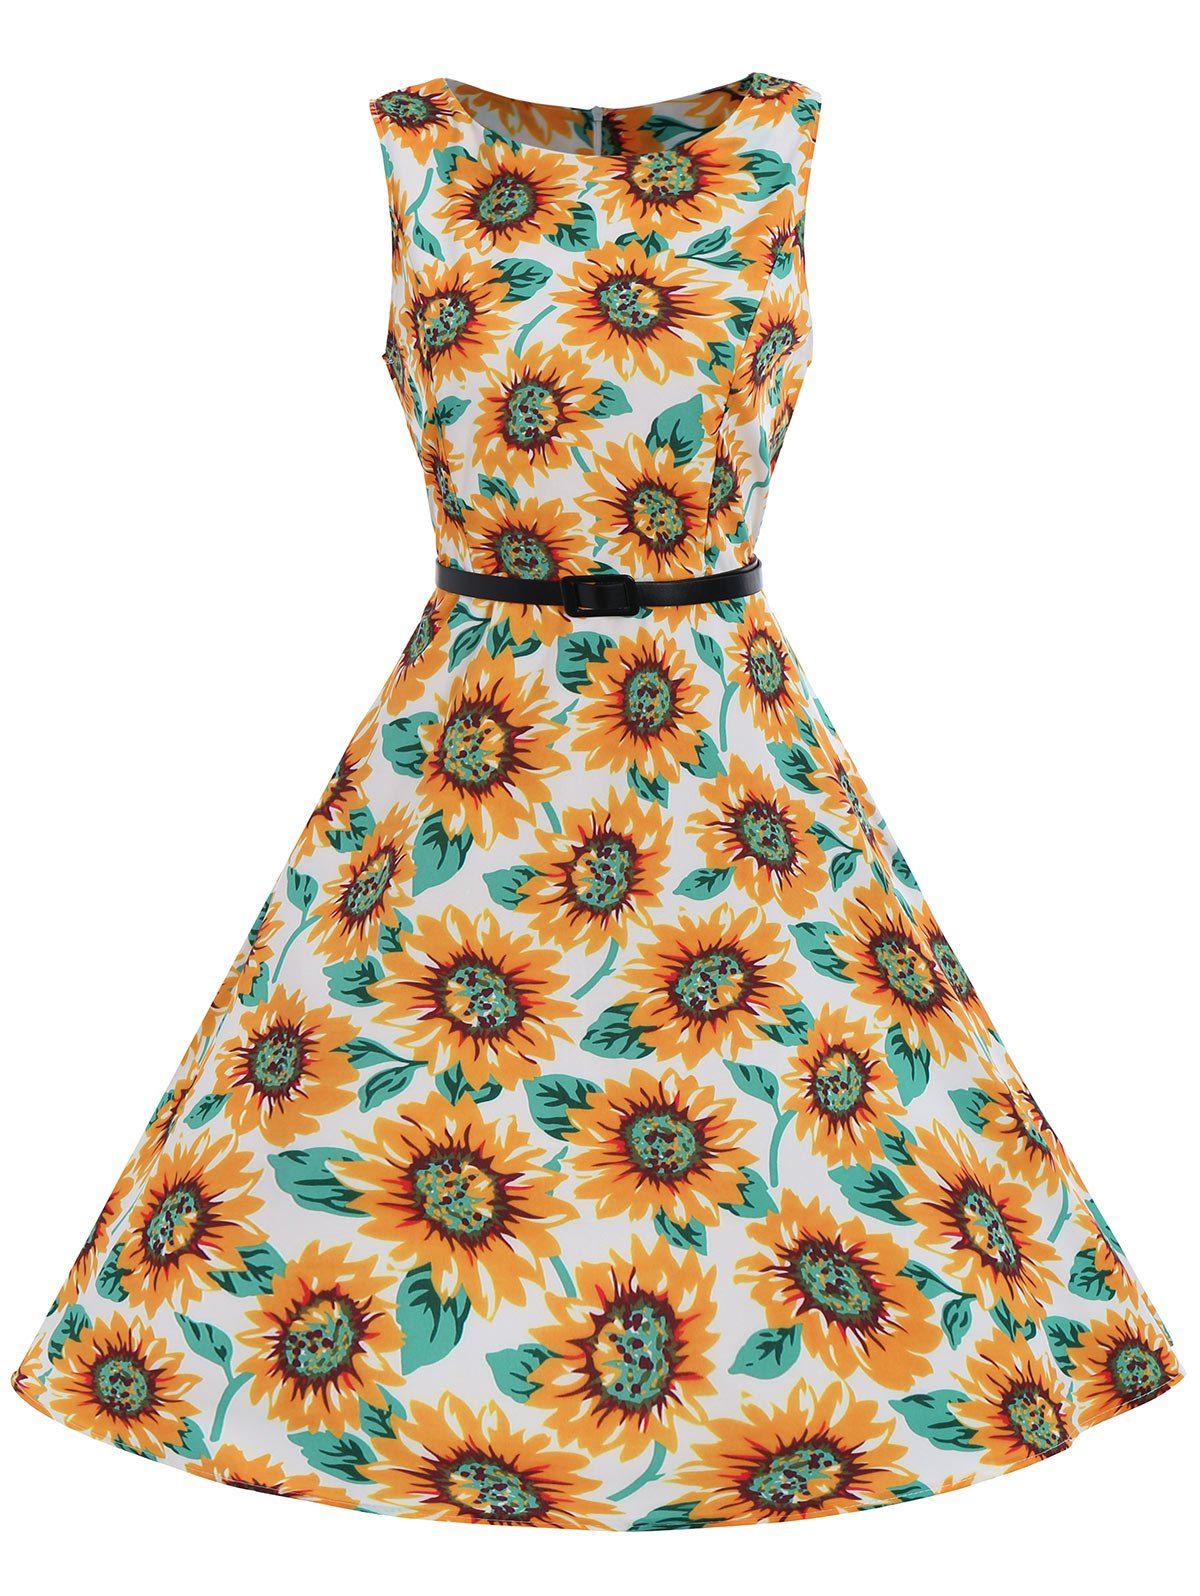 [41% OFF] 2021 Sunflower High Waist A Line Vintage Dress In YELLOW ...